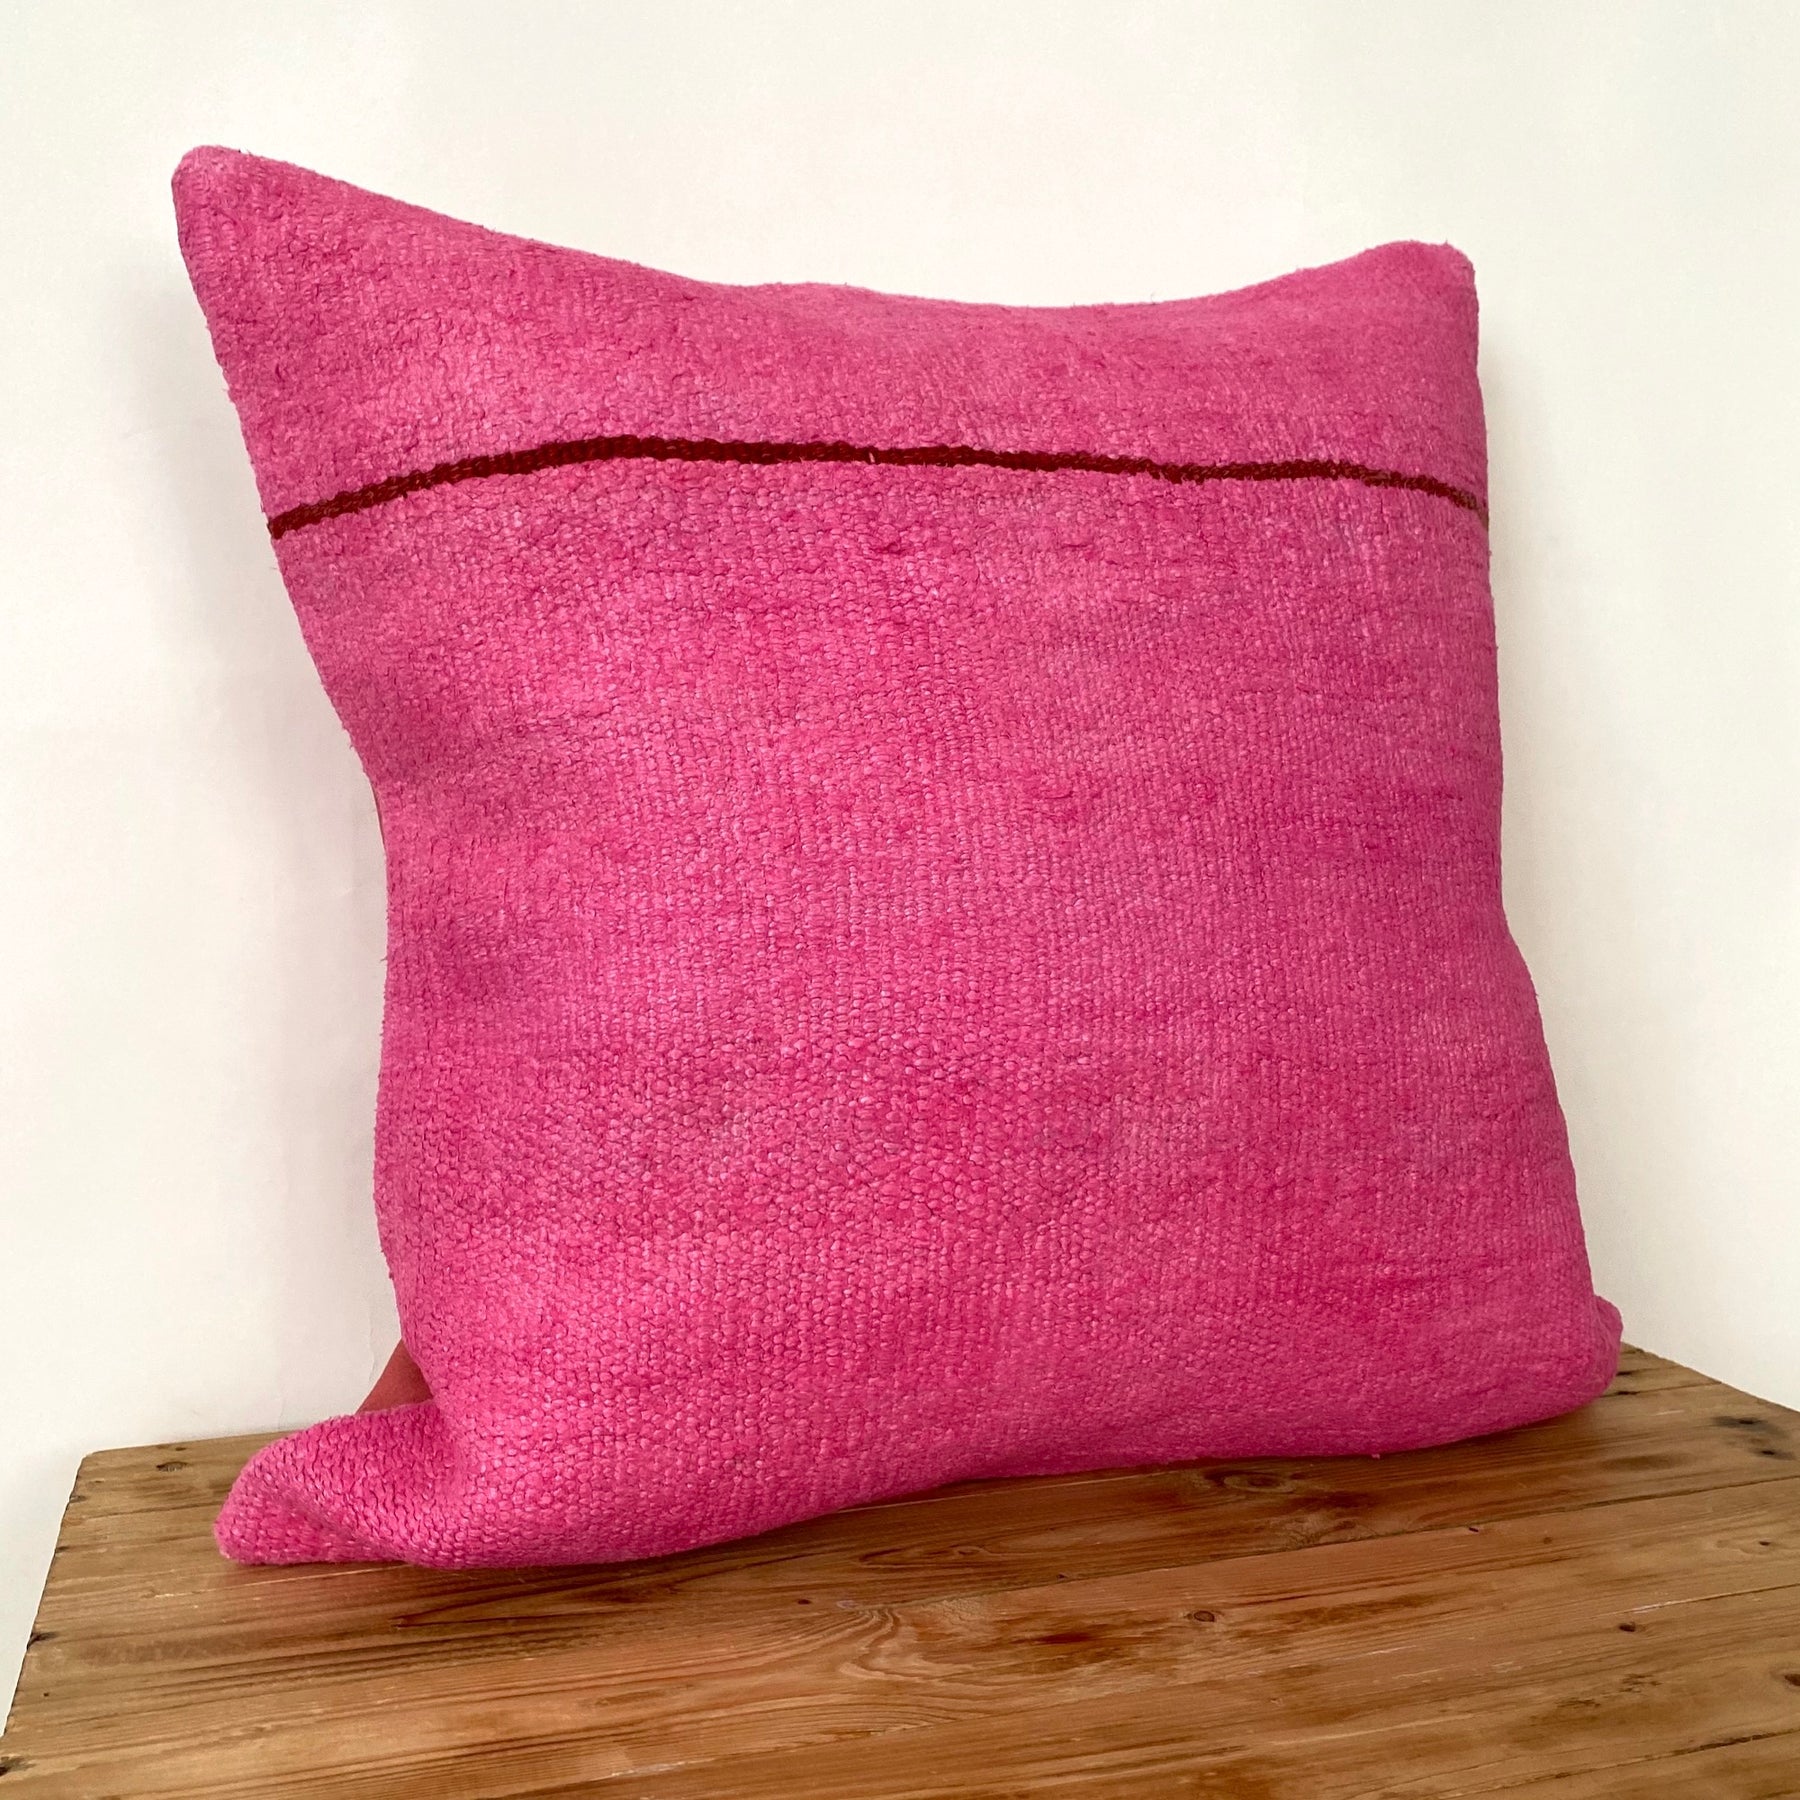 Gyovana - Pink Hemp Pillow Cover - kudenrugs